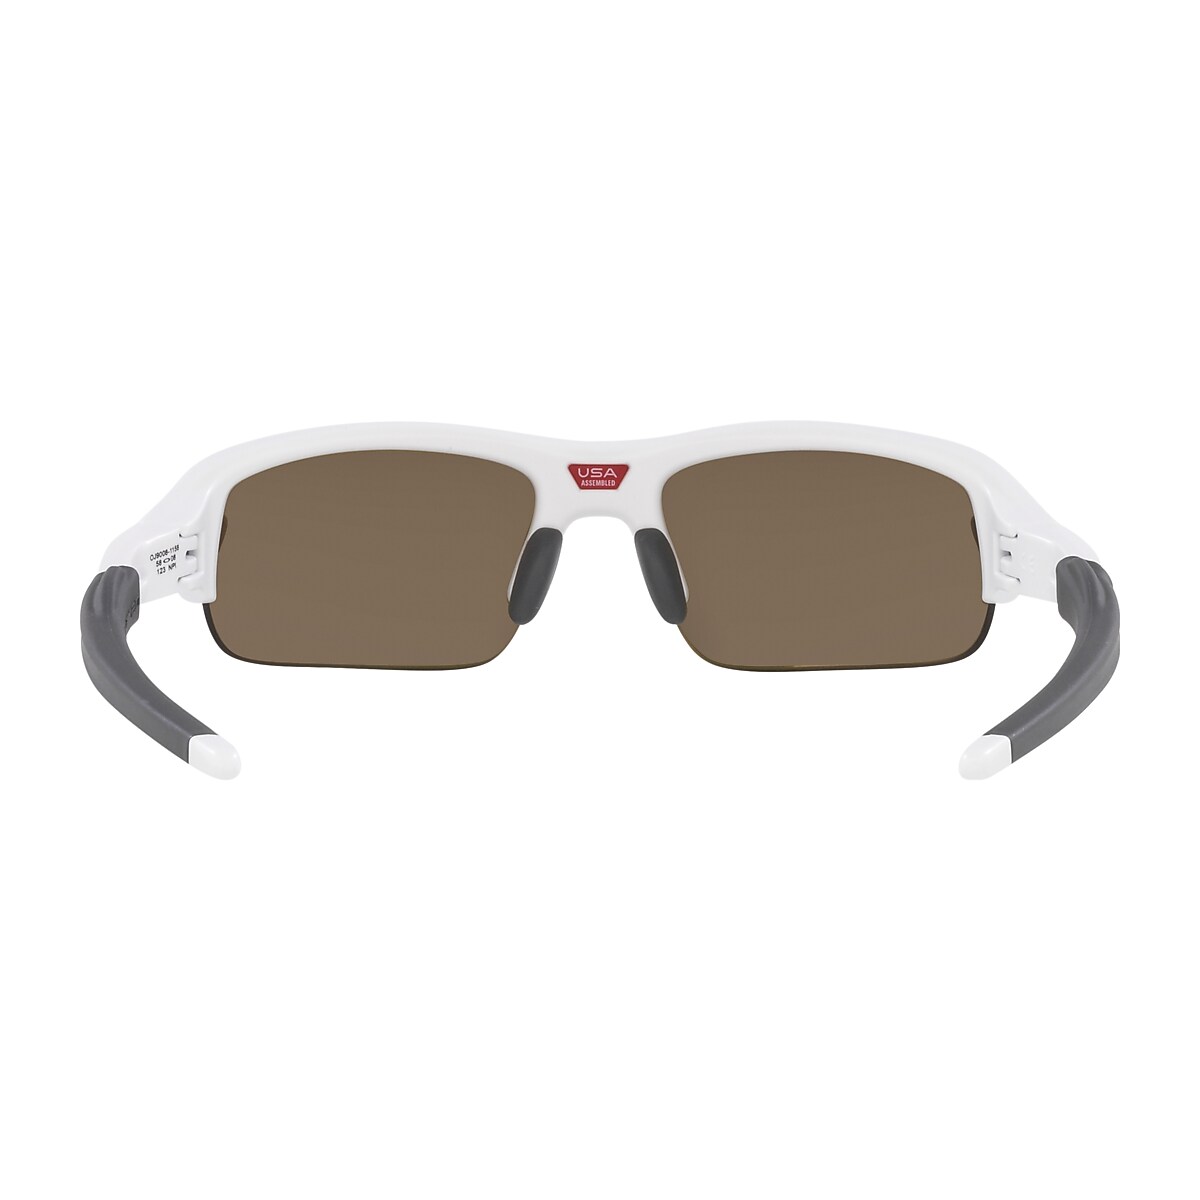 Flak® XXS (Youth Fit) Prizm Rose Gold Lenses, Matte White Frame Sunglasses